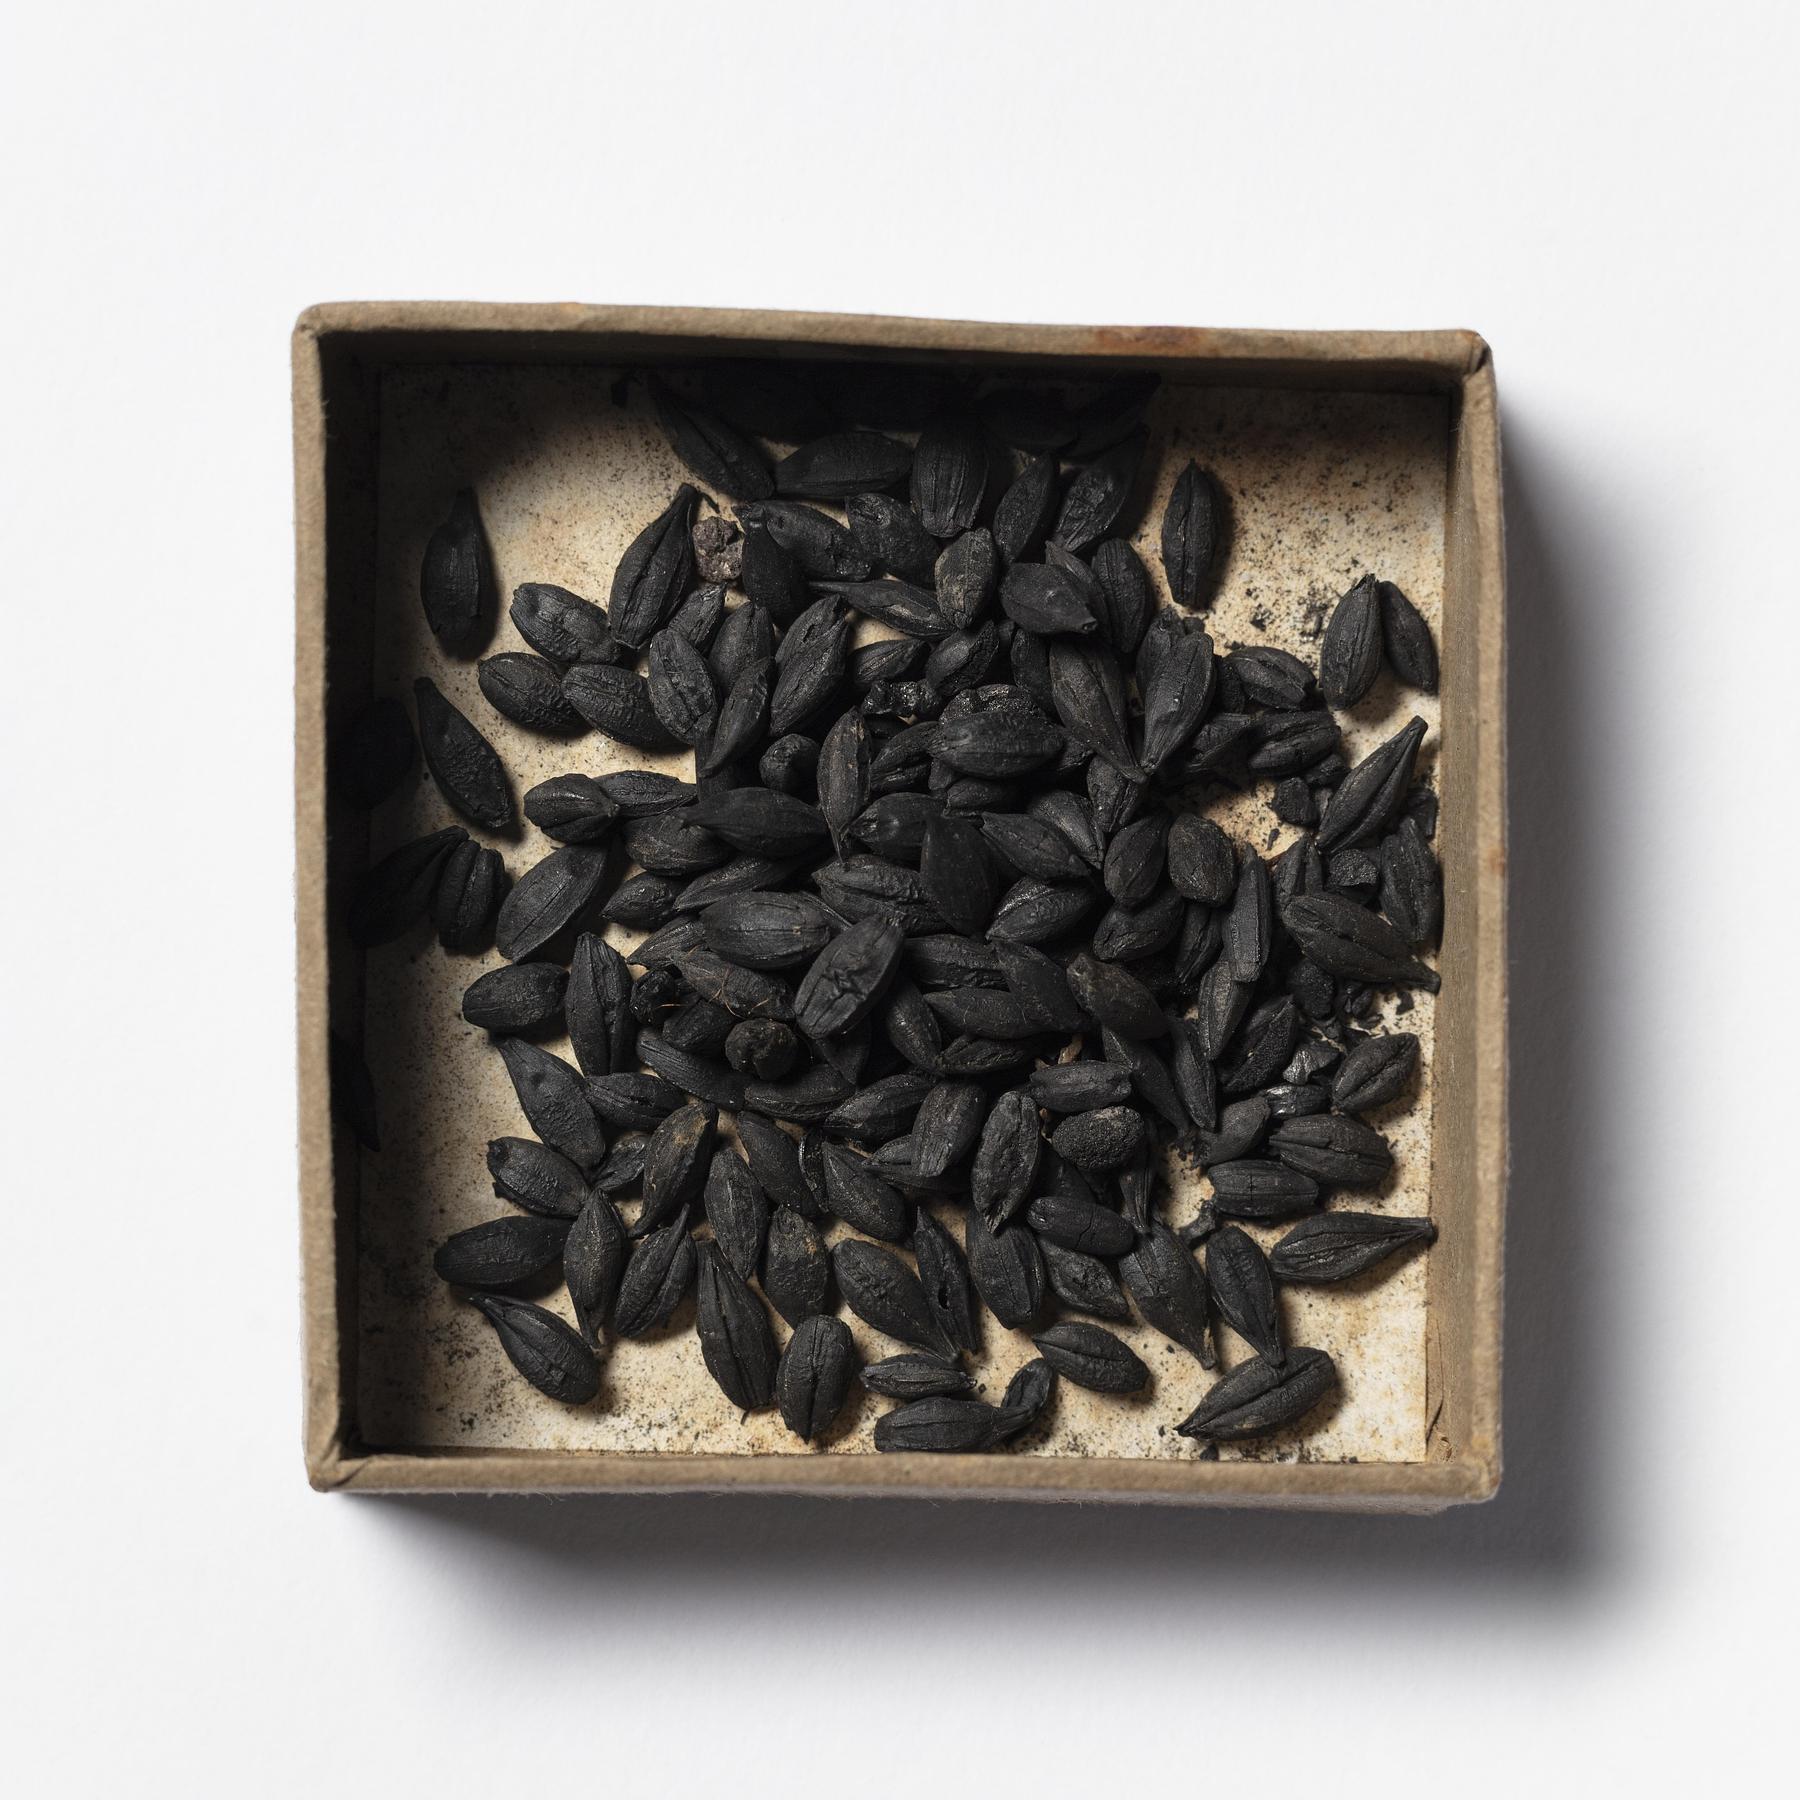 Carbonized grain from Pompeii, H3404